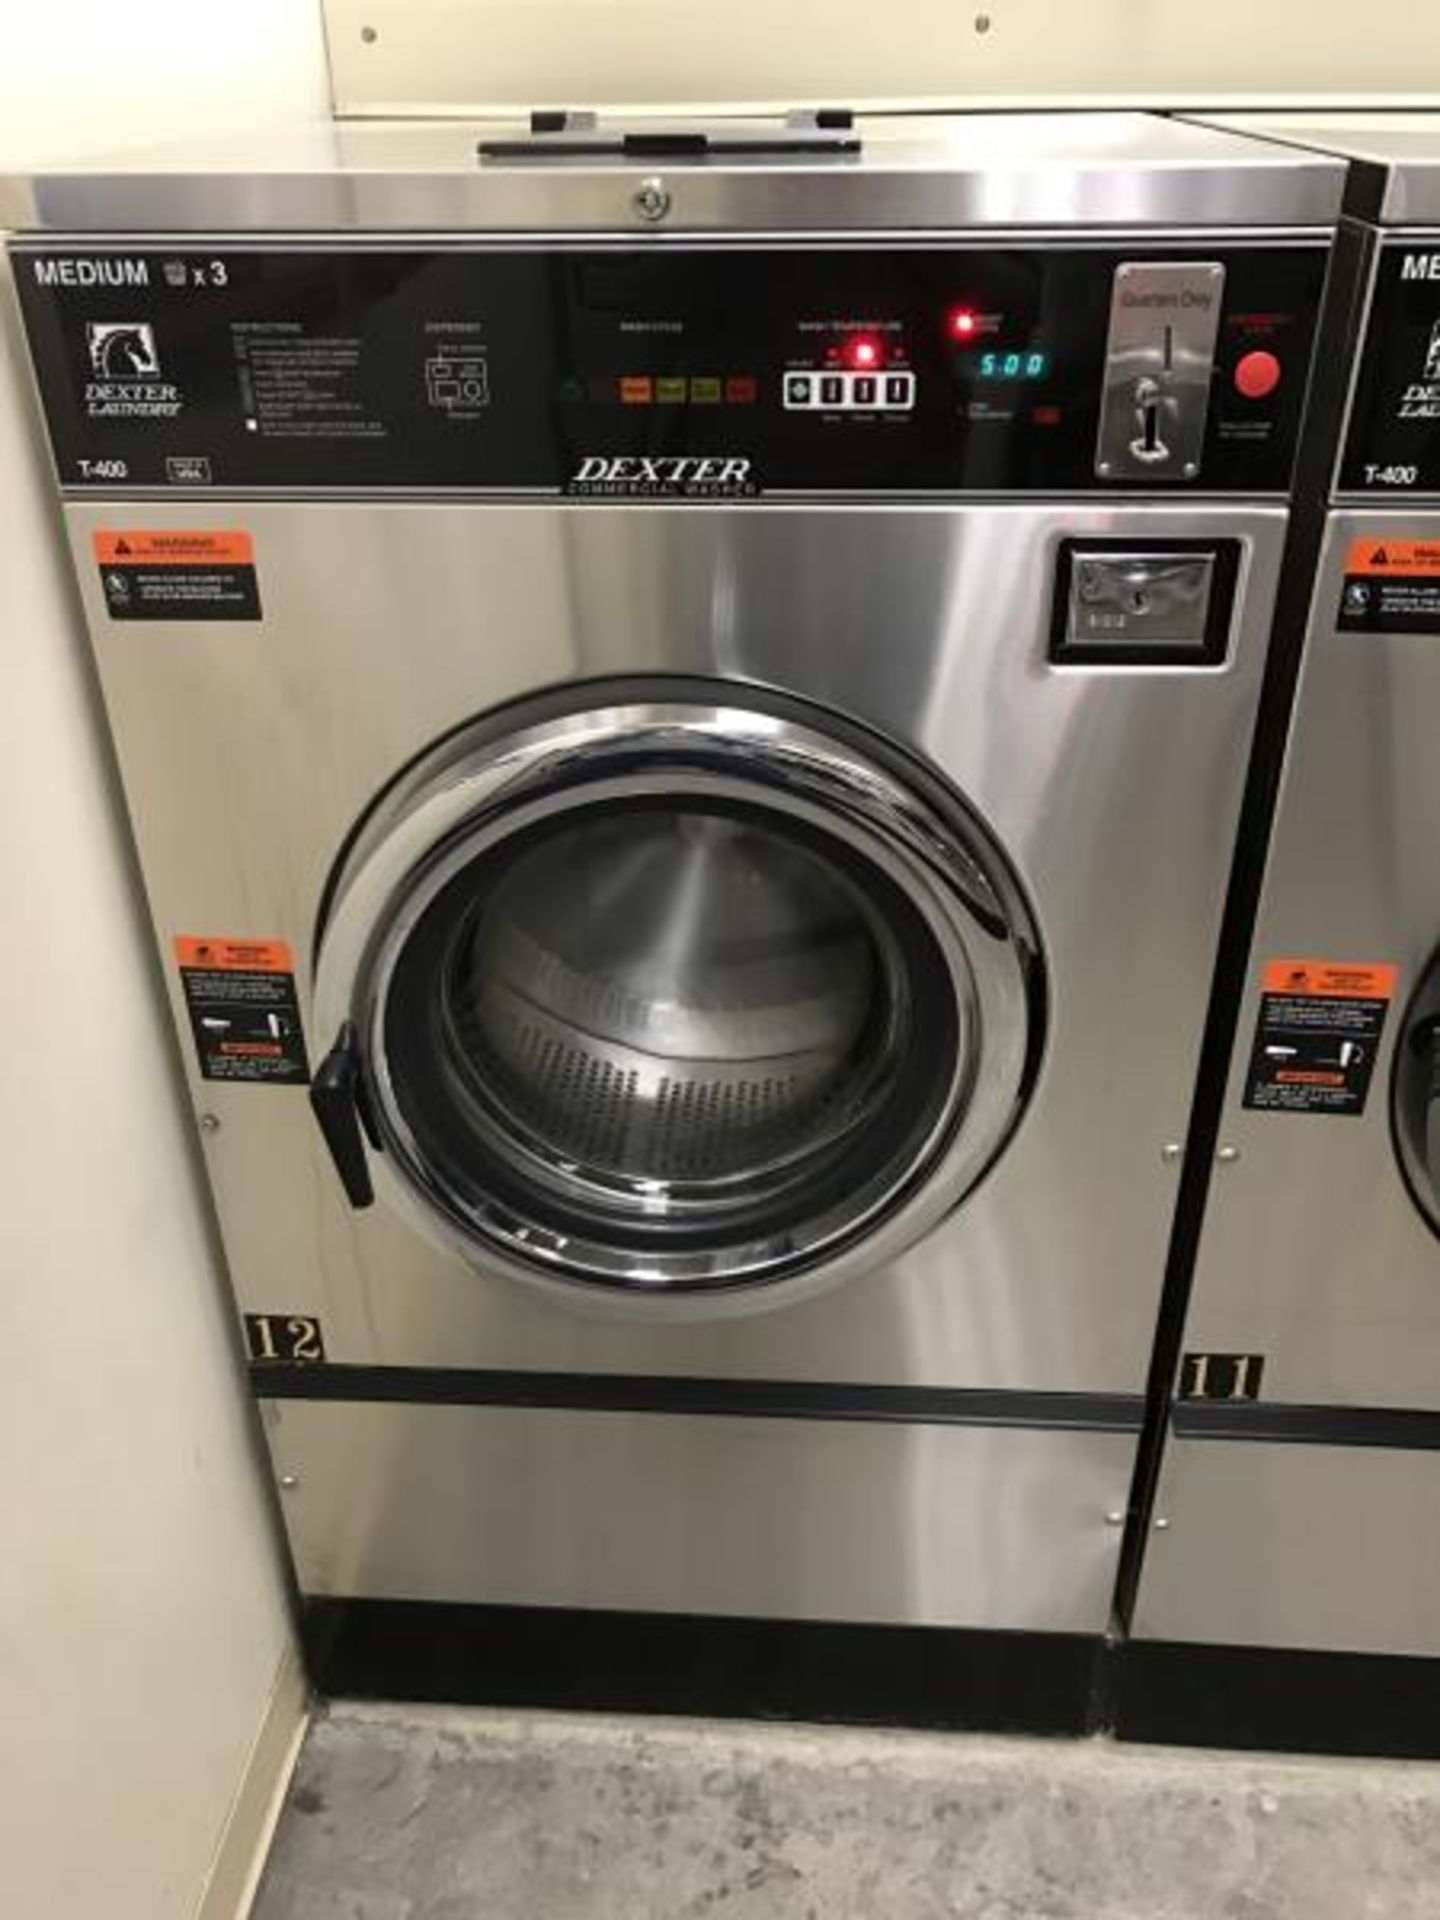 Dexter Commercial Washing Machine, Medium x 3, 30 Lbs., Model: T-400 / WCAD30KCX-12CN, SN: 531759